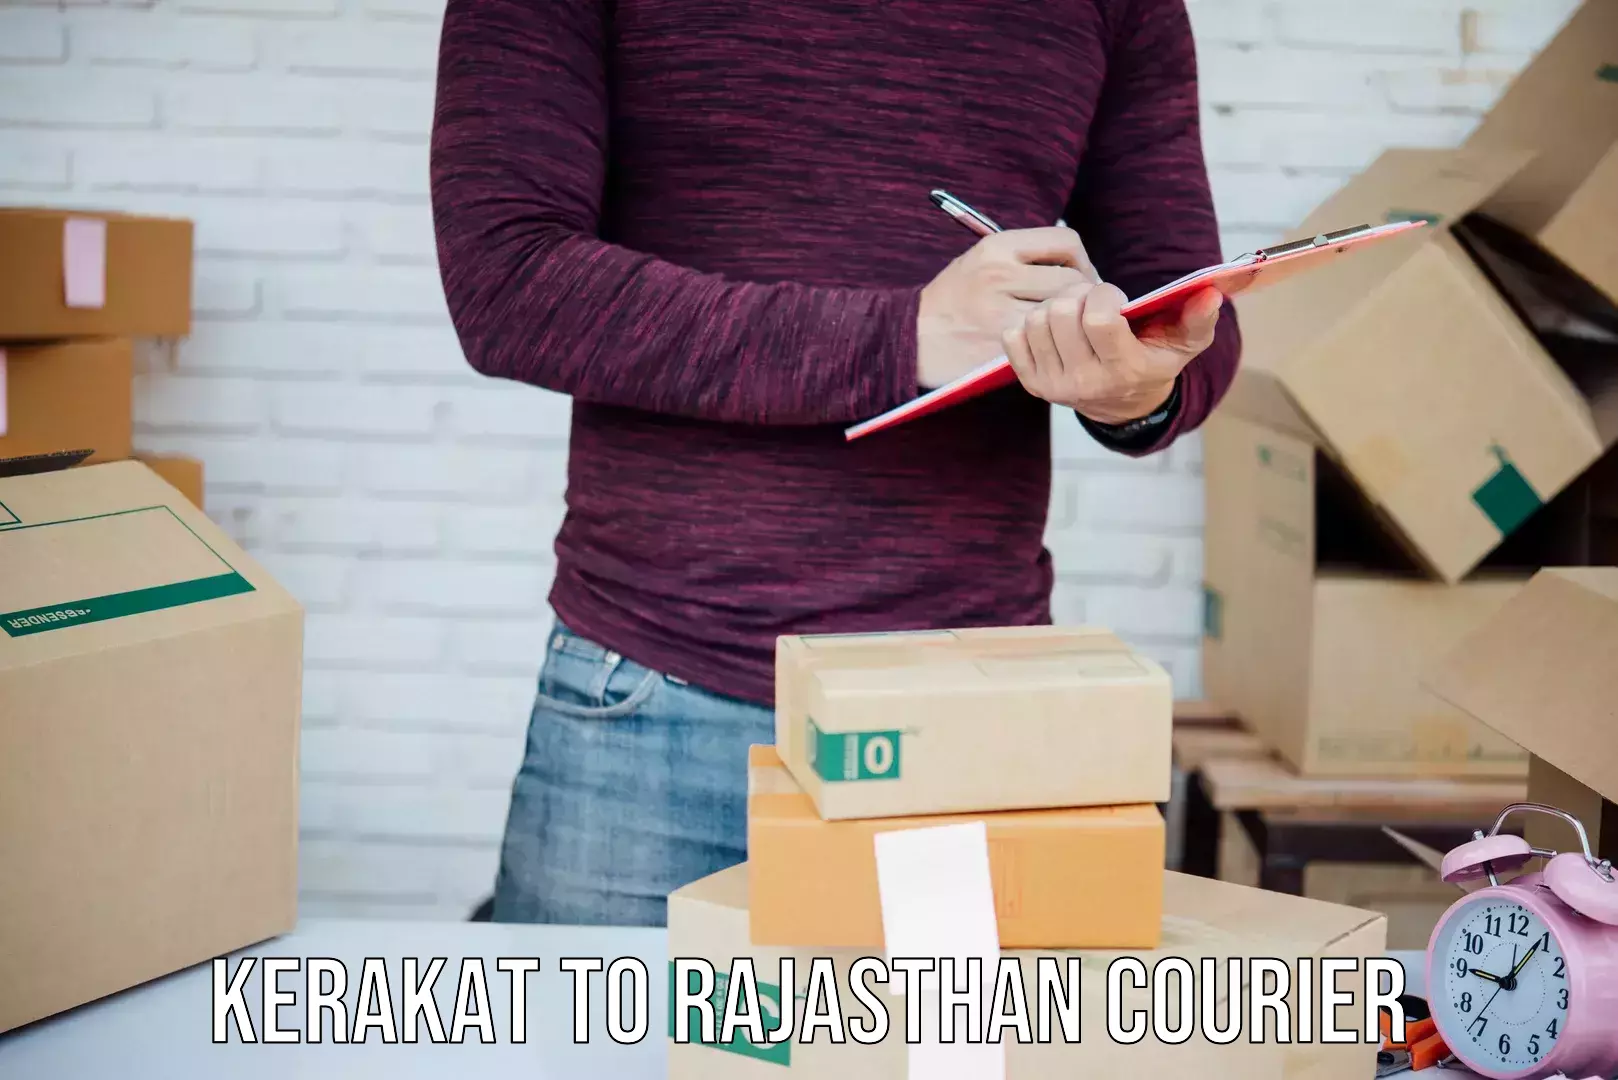 Courier service booking Kerakat to Asind